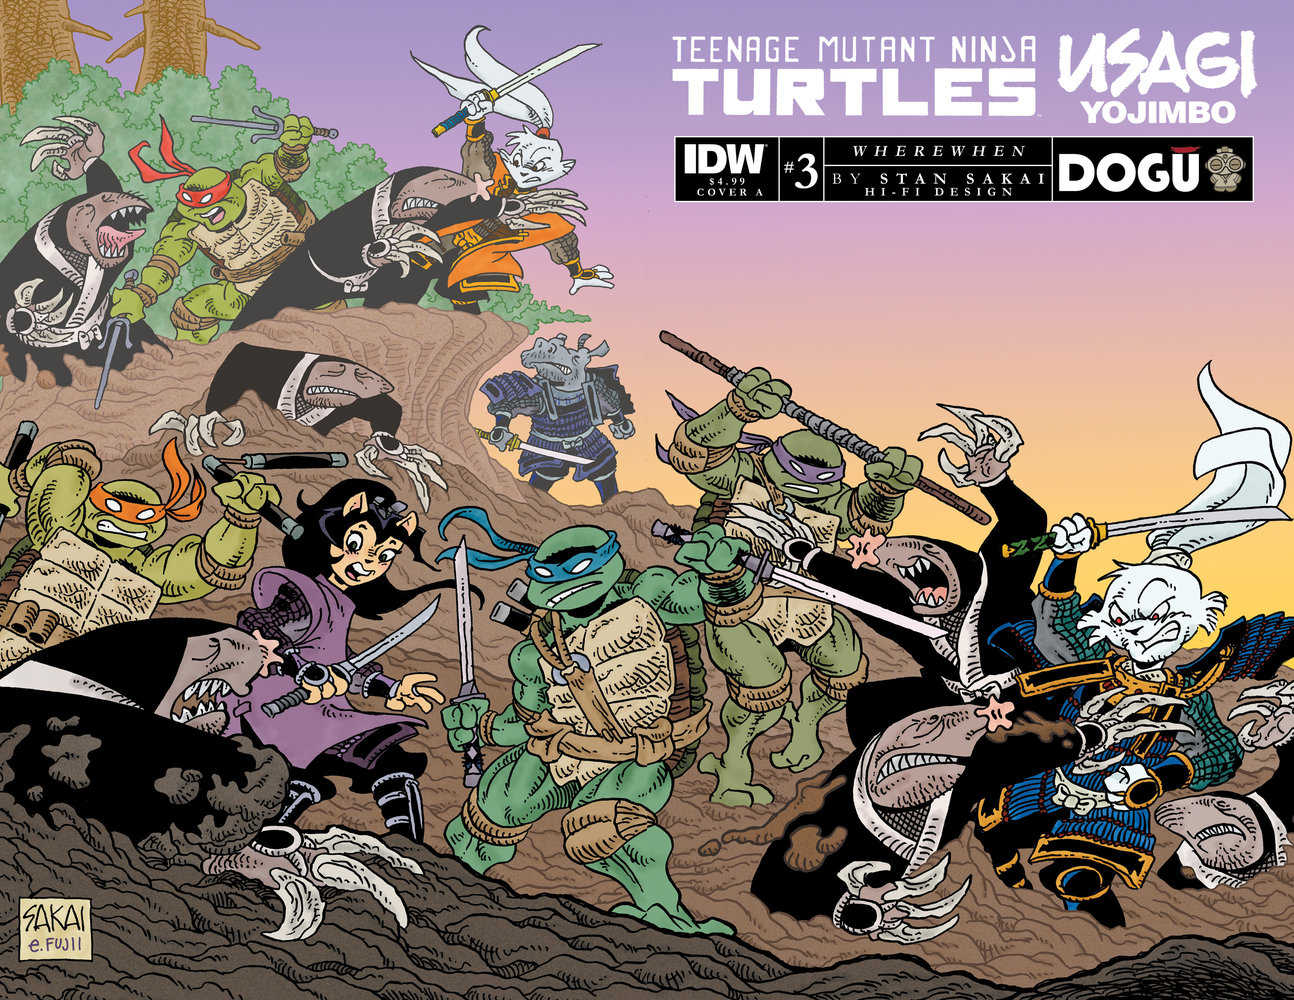 Teenage Mutant Ninja Turtles/Usagi Yojimbo: Wherewhen #3 Cover A (Sakai) - The Fourth Place